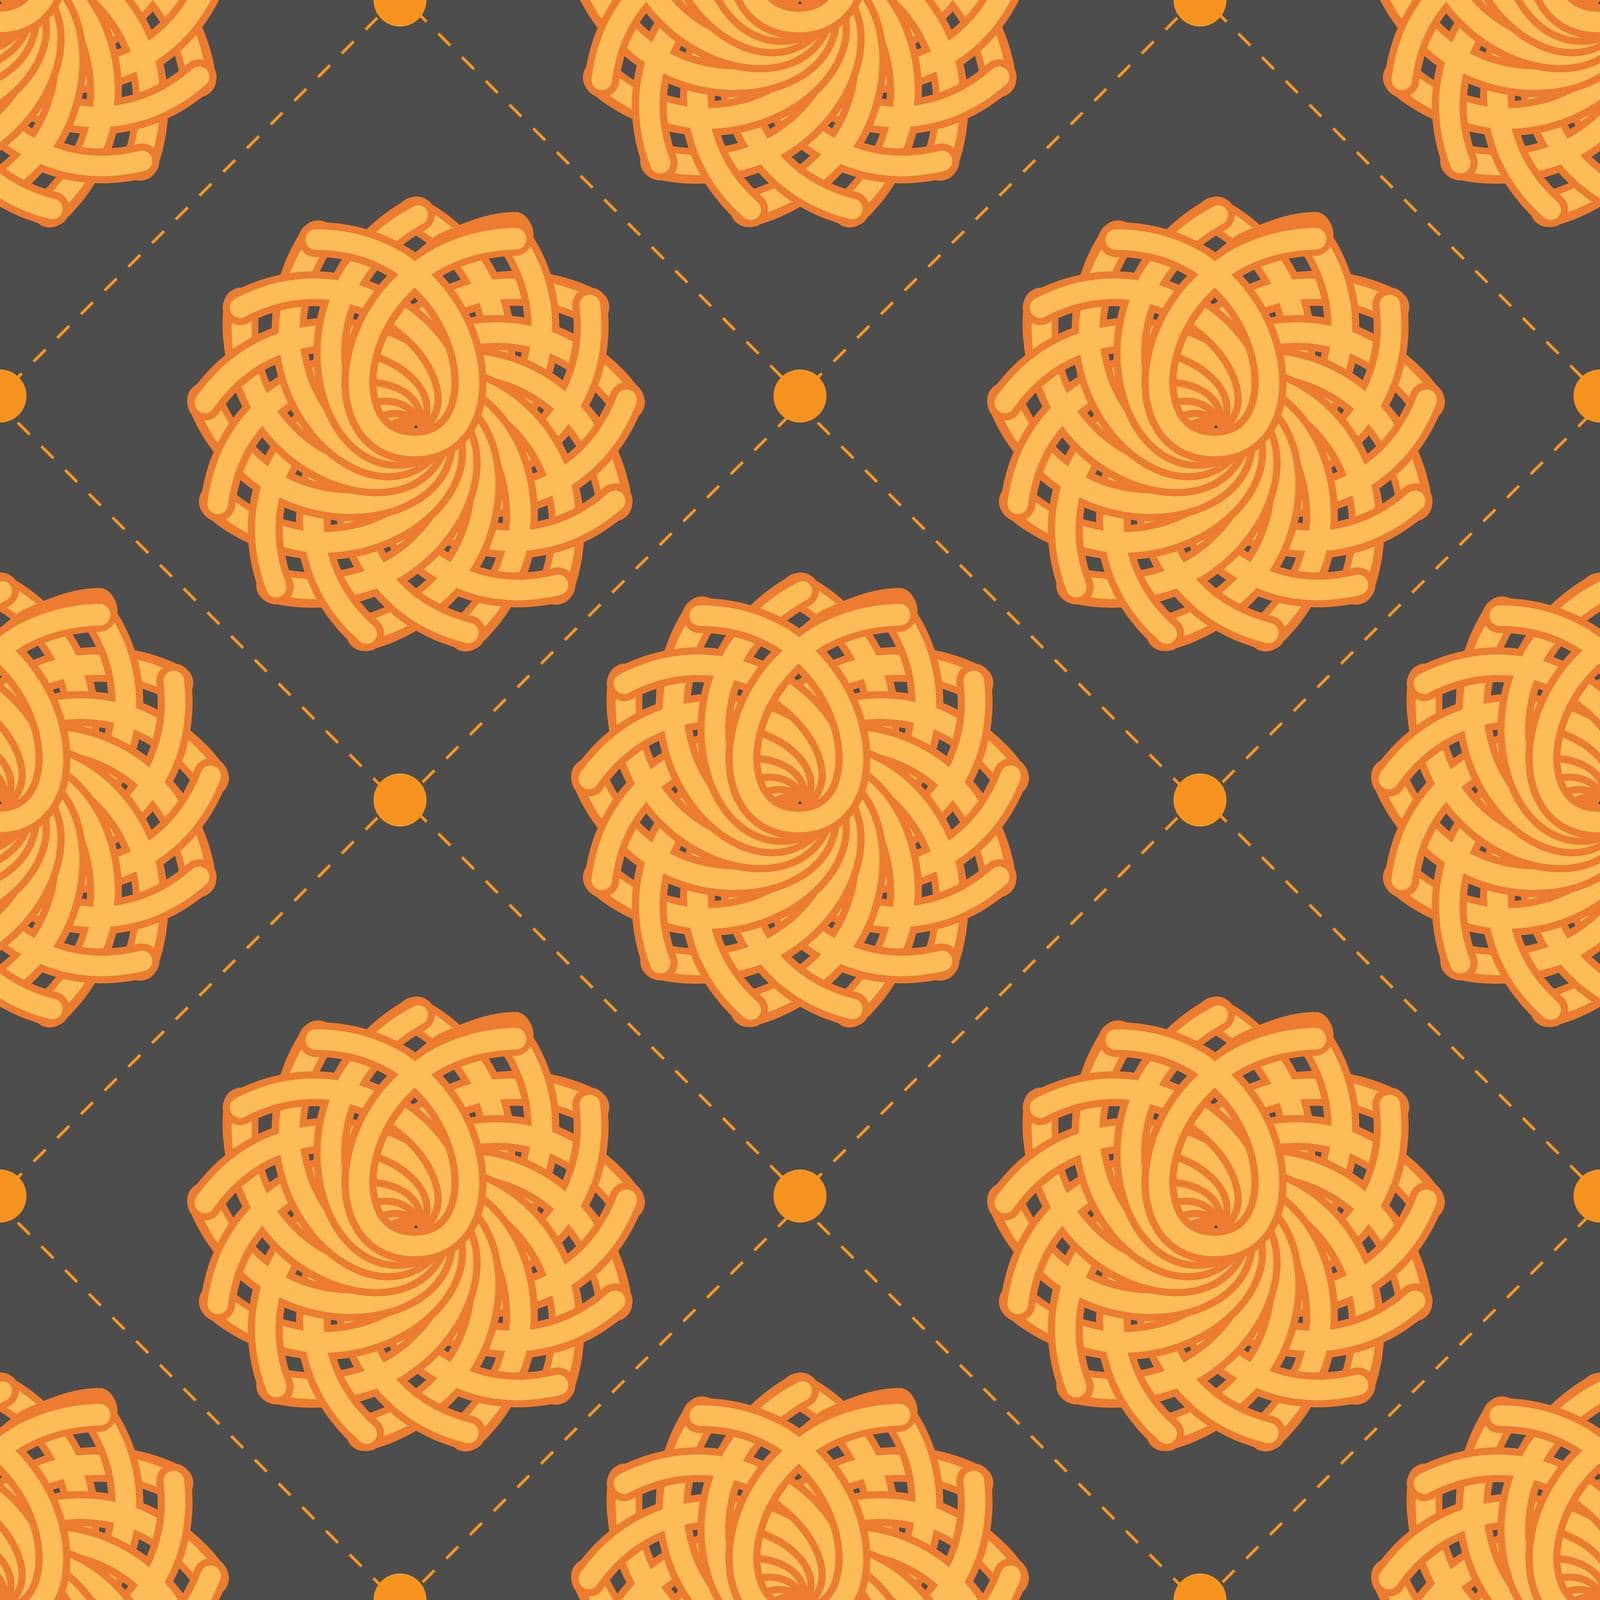 Ornament pattern vector tile